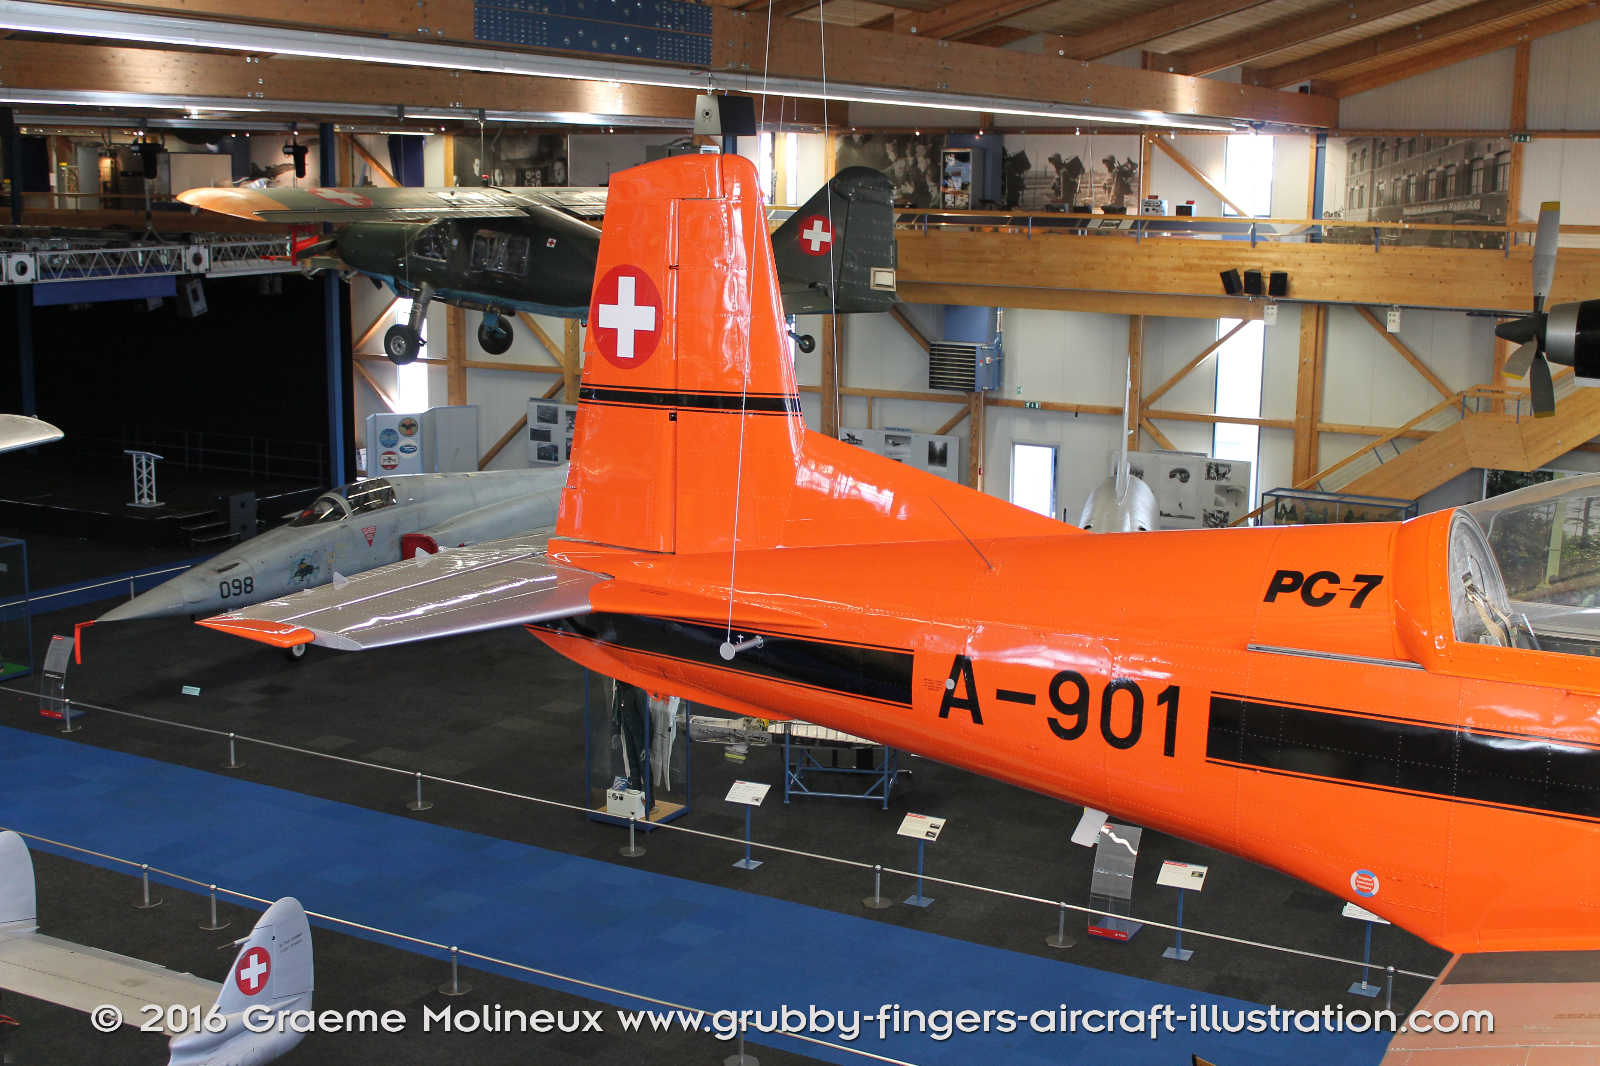 PILATUS_PC-7_A-901_Swiss_Air_Force_Museum_2015_10_GrubbyFingers